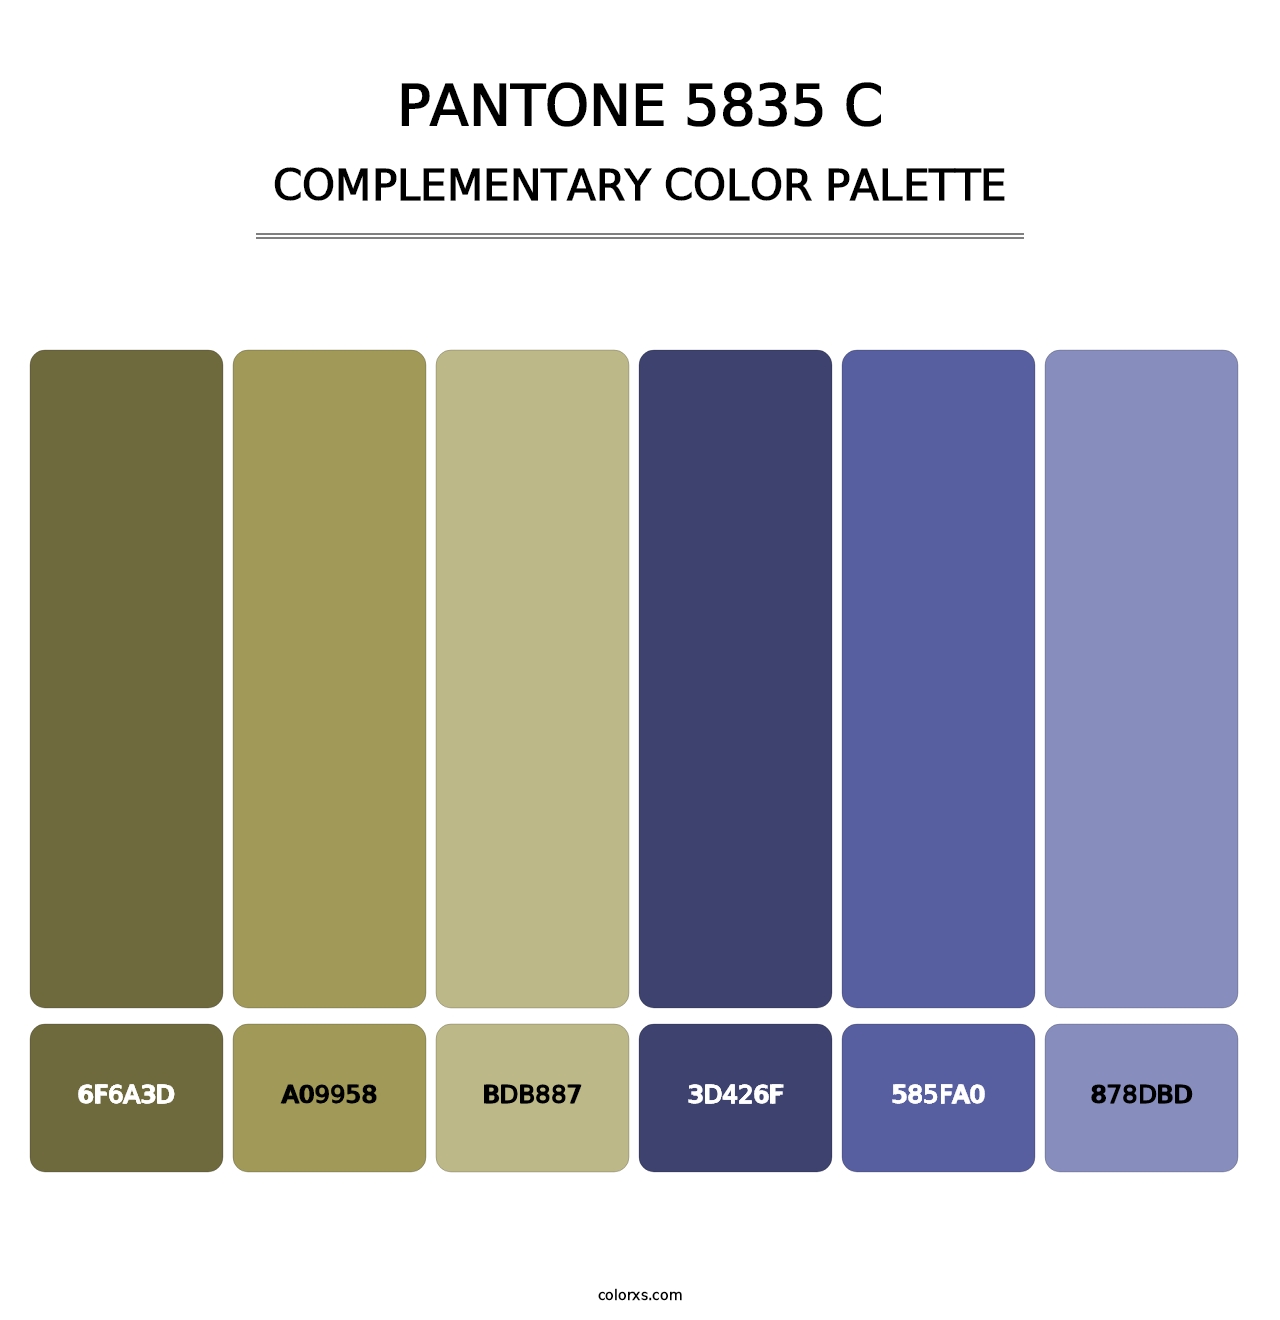 PANTONE 5835 C - Complementary Color Palette